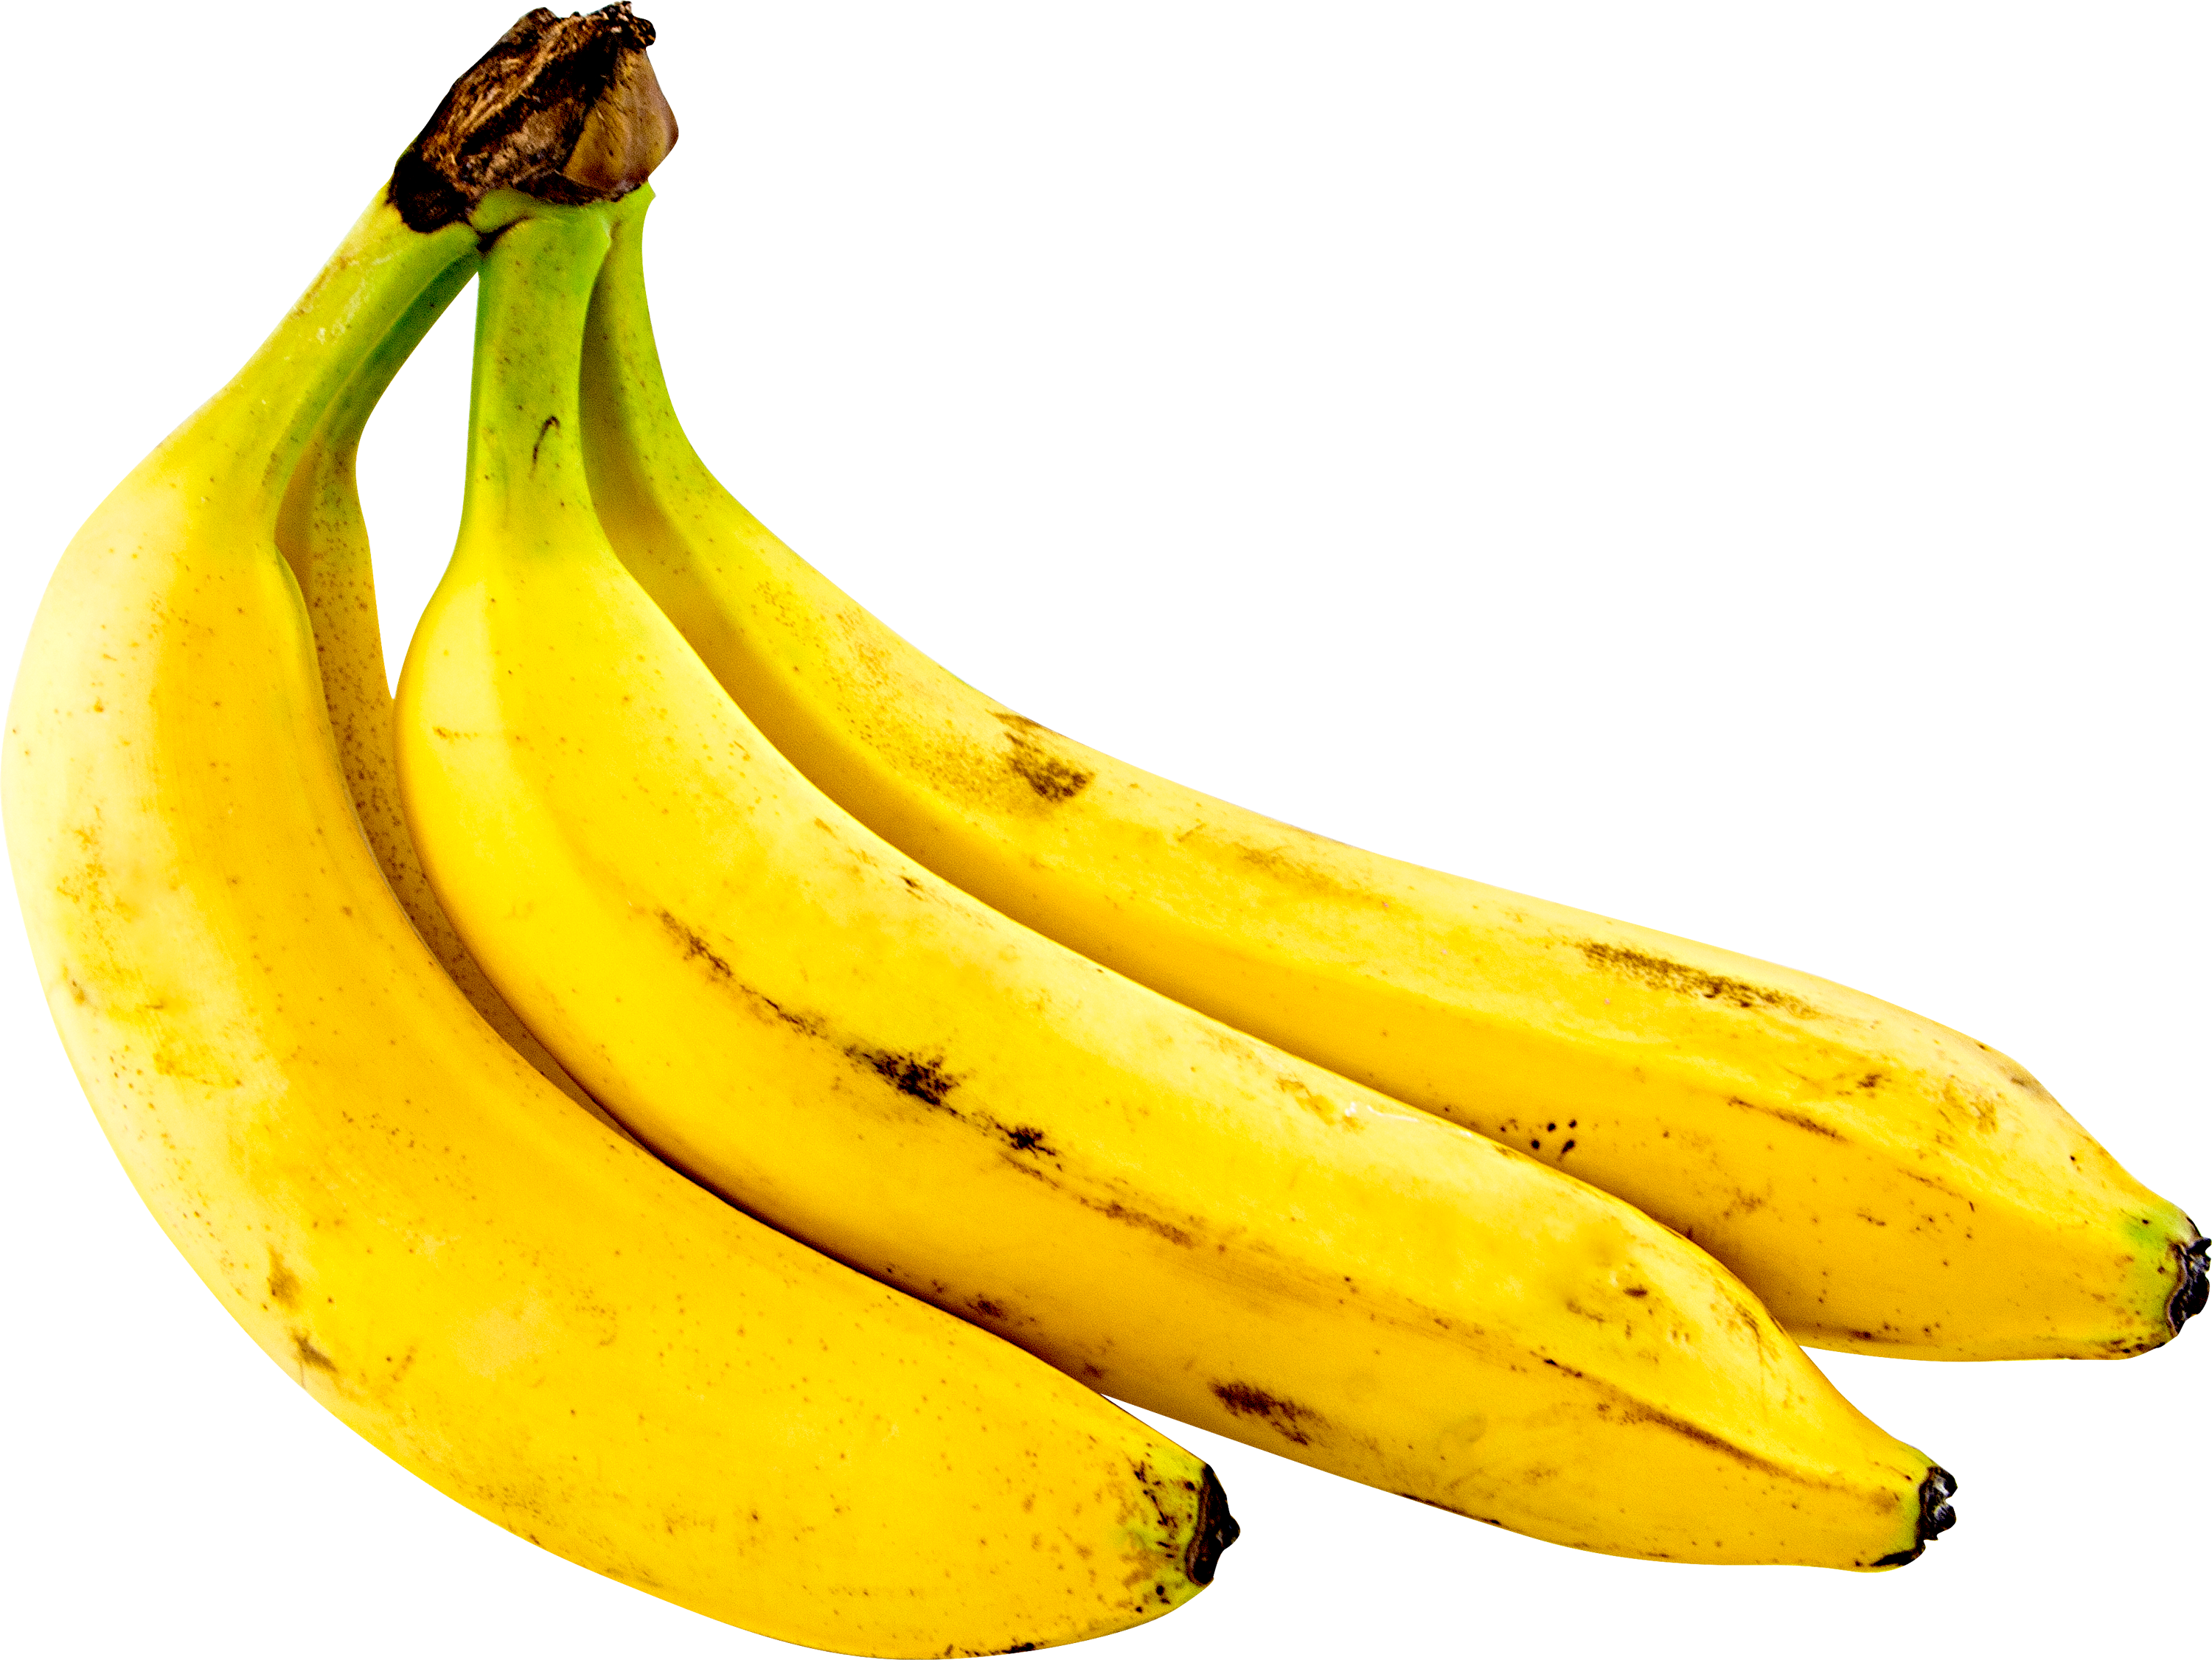 Banana's PNG Image - PurePNG  Free transparent CC0 PNG Image Library